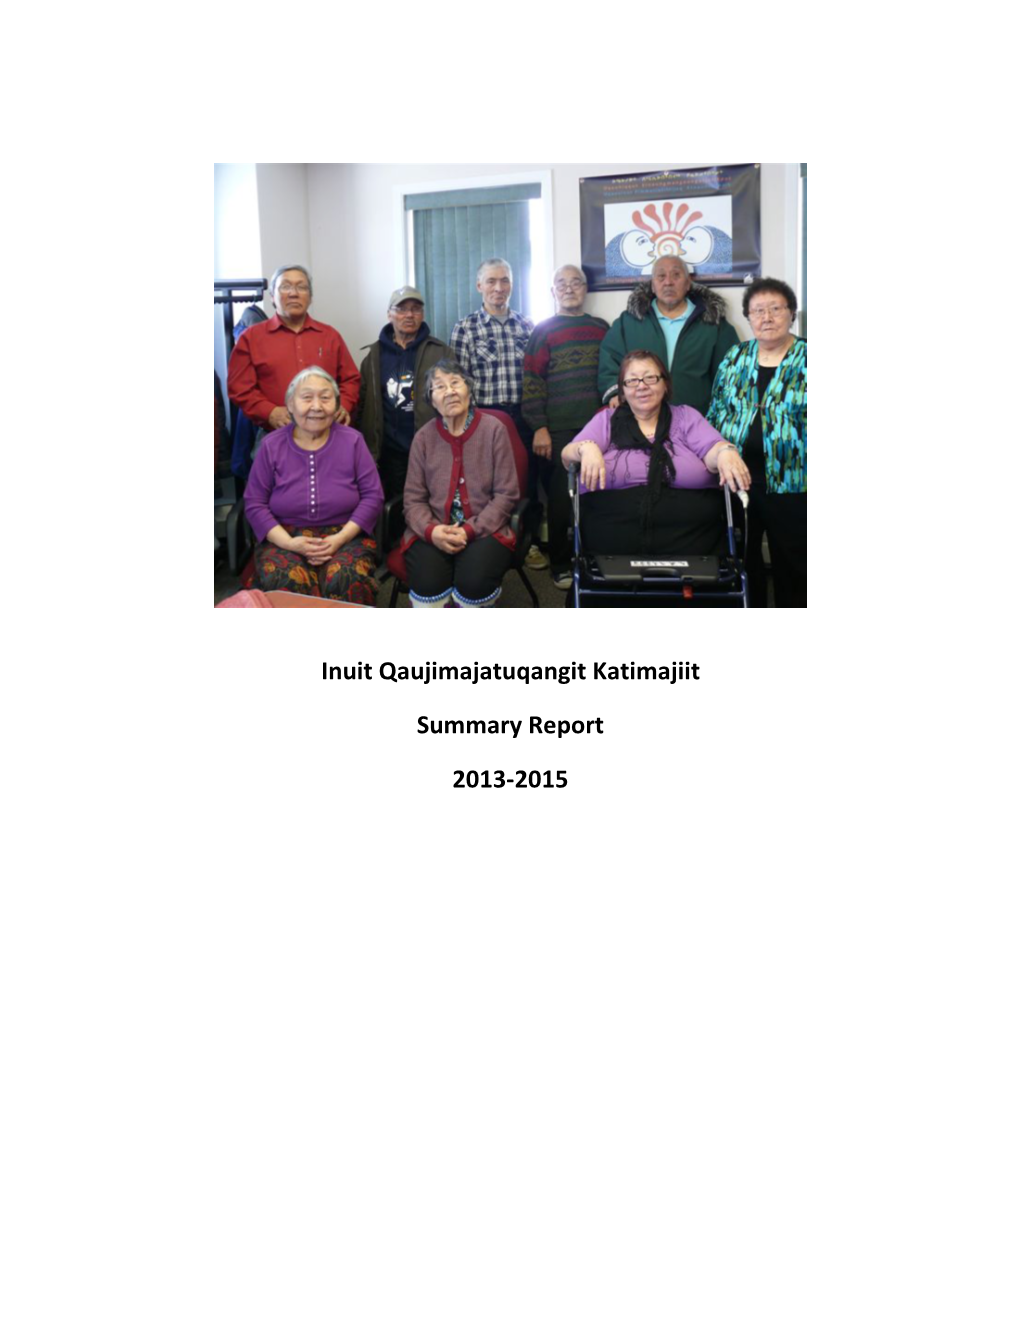 Inuit Qaujimajatuqangit Katimajiit Summary Report 2013-2015